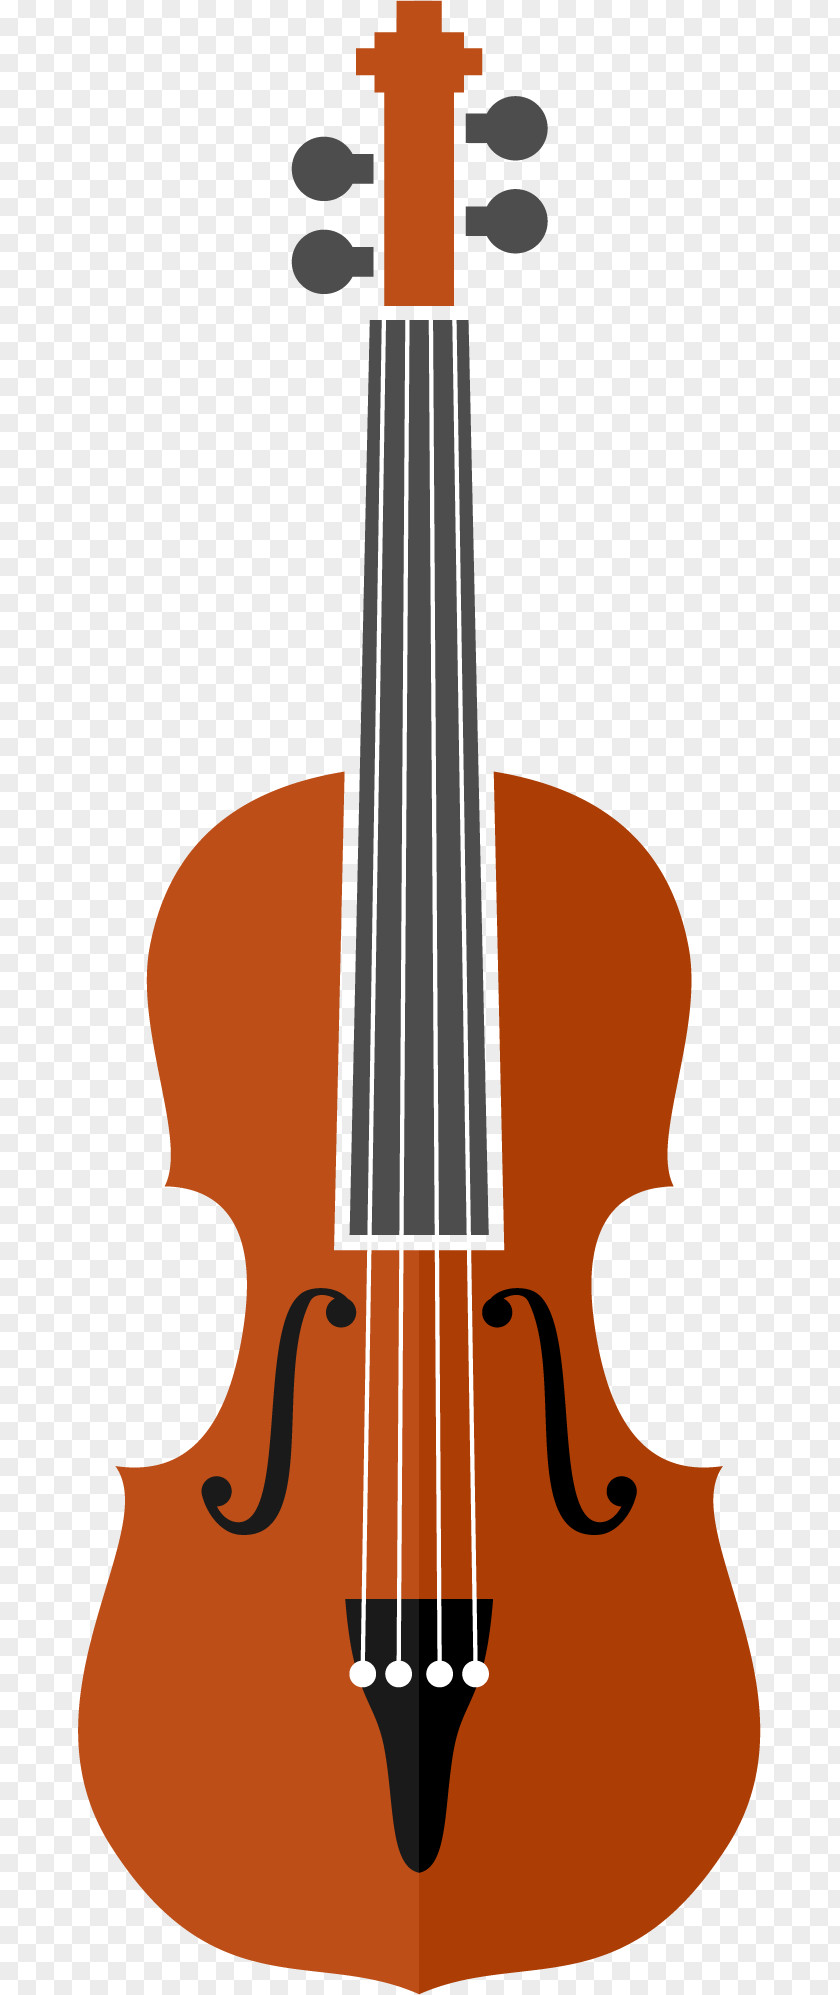 Cartoon Vector Violin Stradivarius Cello Musical Instrument Viola PNG